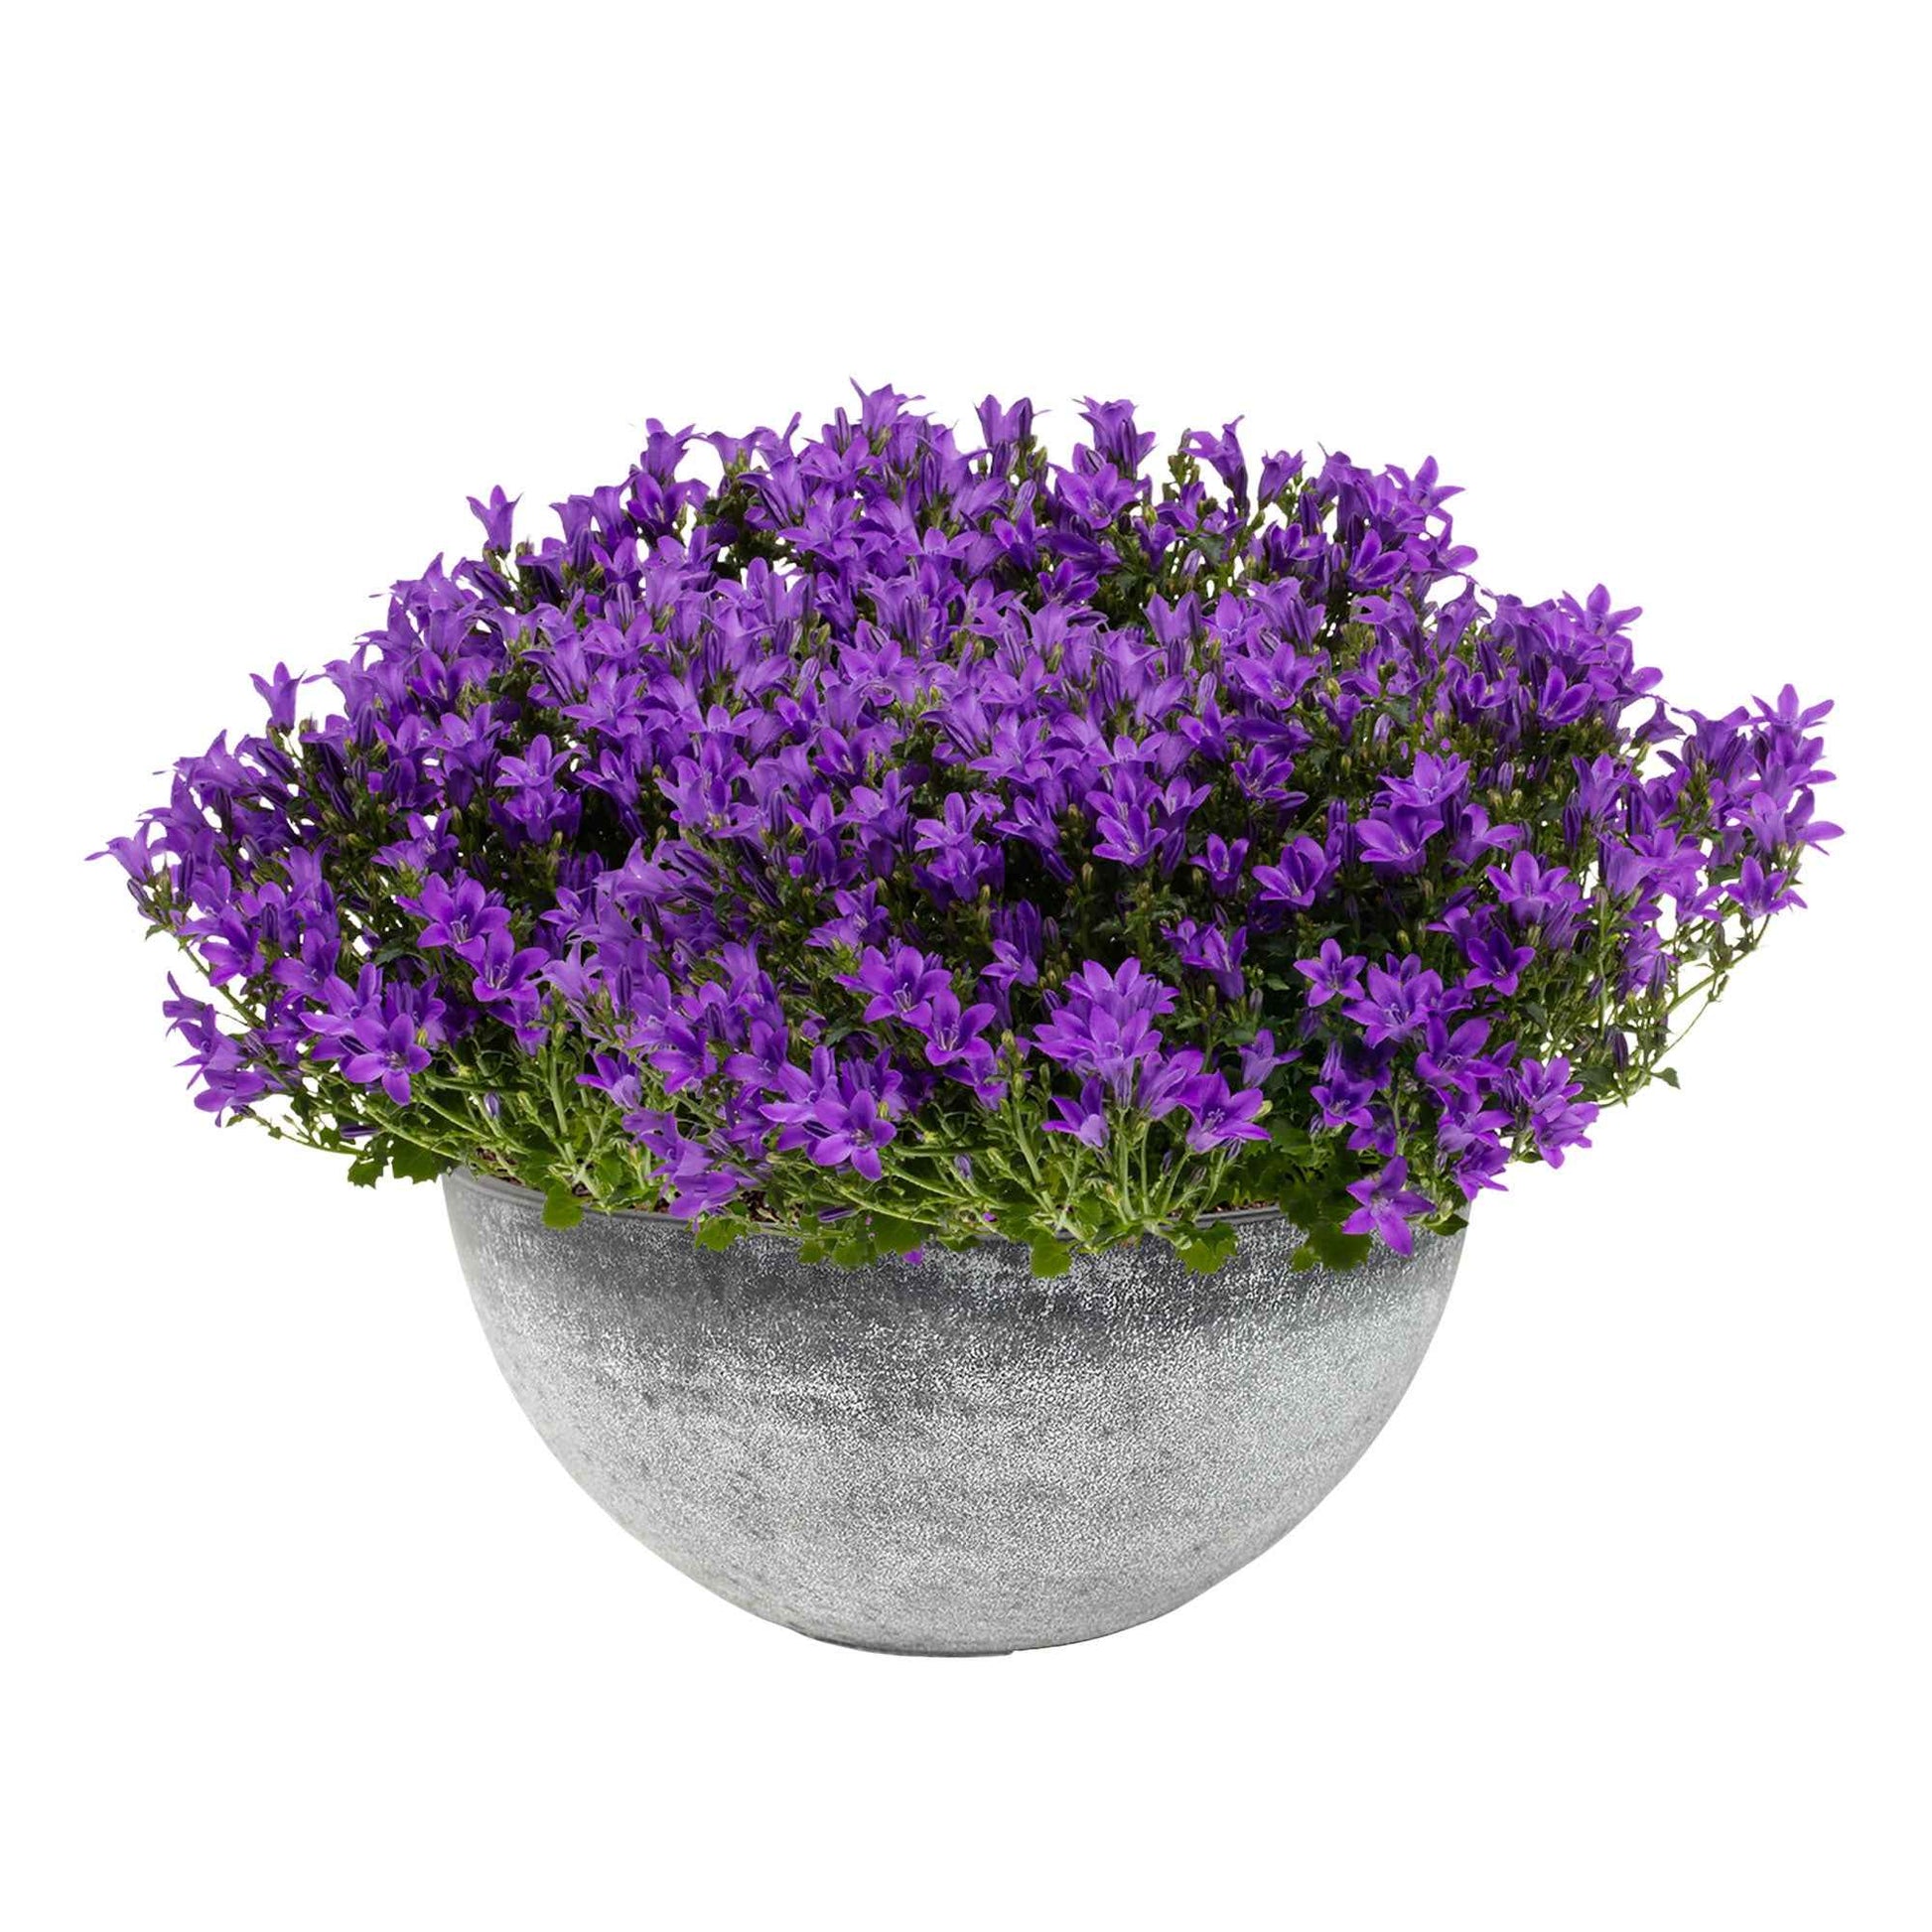 3x Campanule Campanula 'Ambella Intense Purple' violet avec plat gris - Campanule en pot décoratif